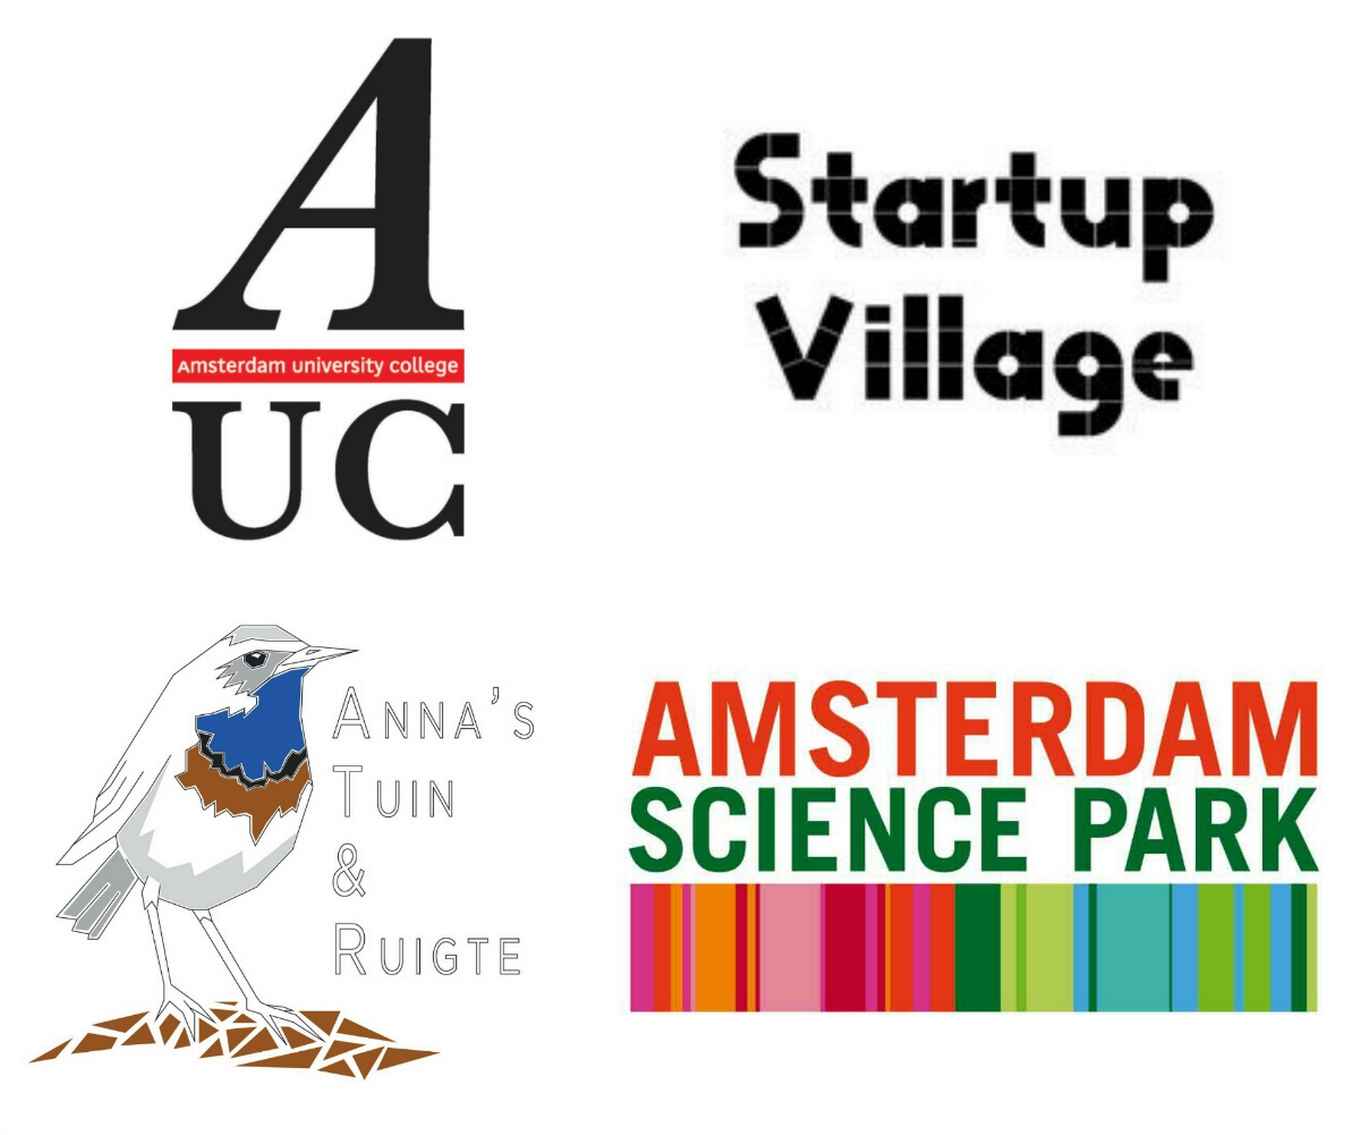 Amsterdam University College,Science Park,AUC lectures